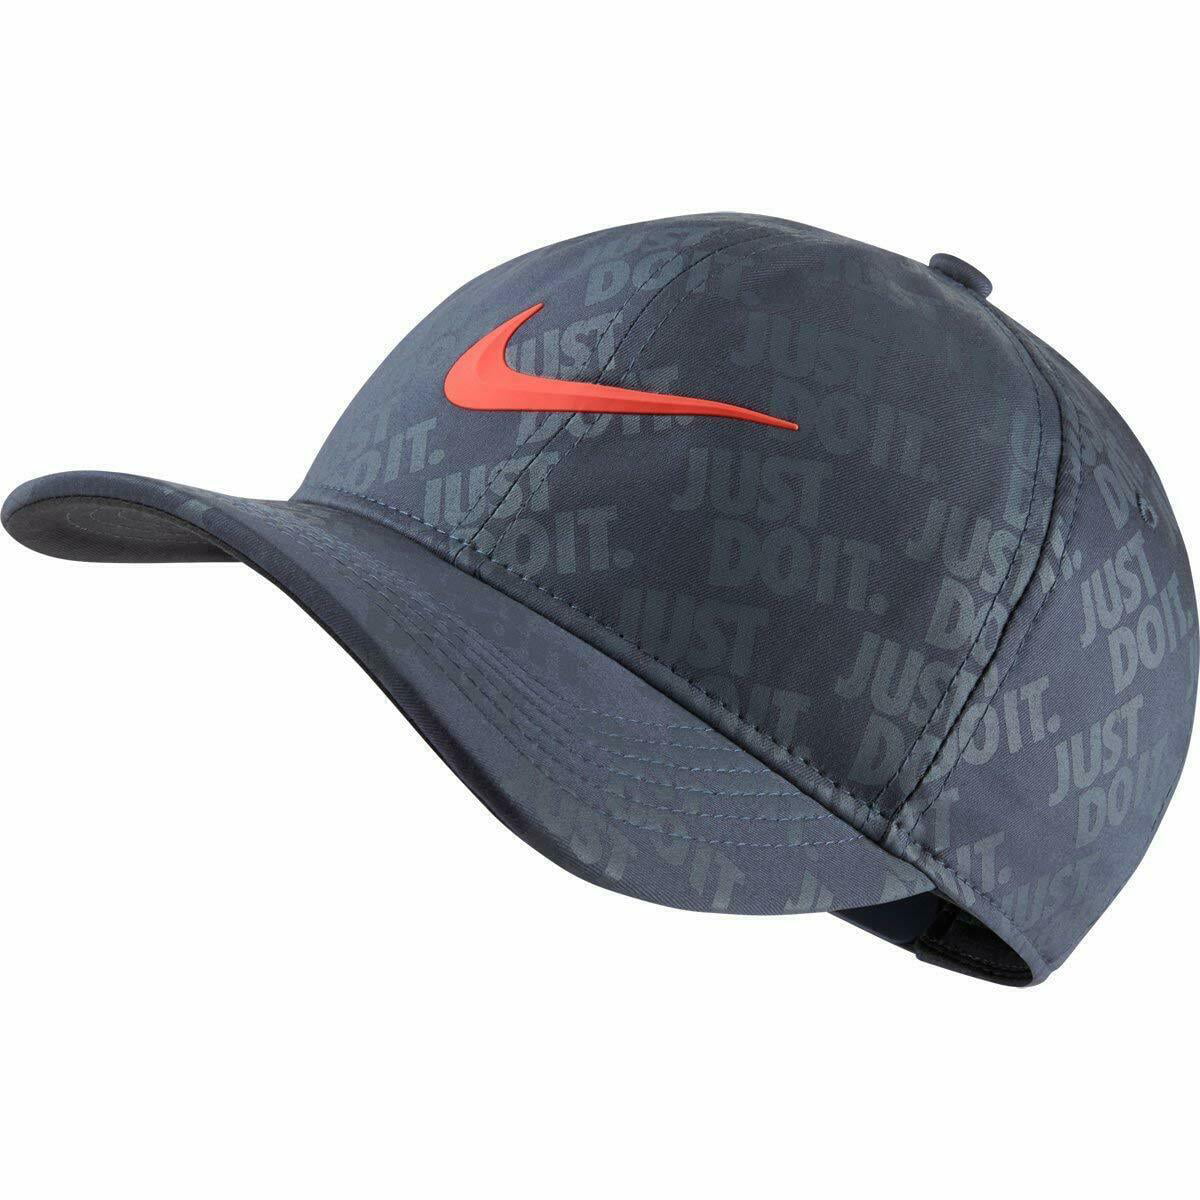 Кепка Nike just do it. Кепка найк Джаст Ду ИТ. Кепка Nike just do it купить хаки. Open hat